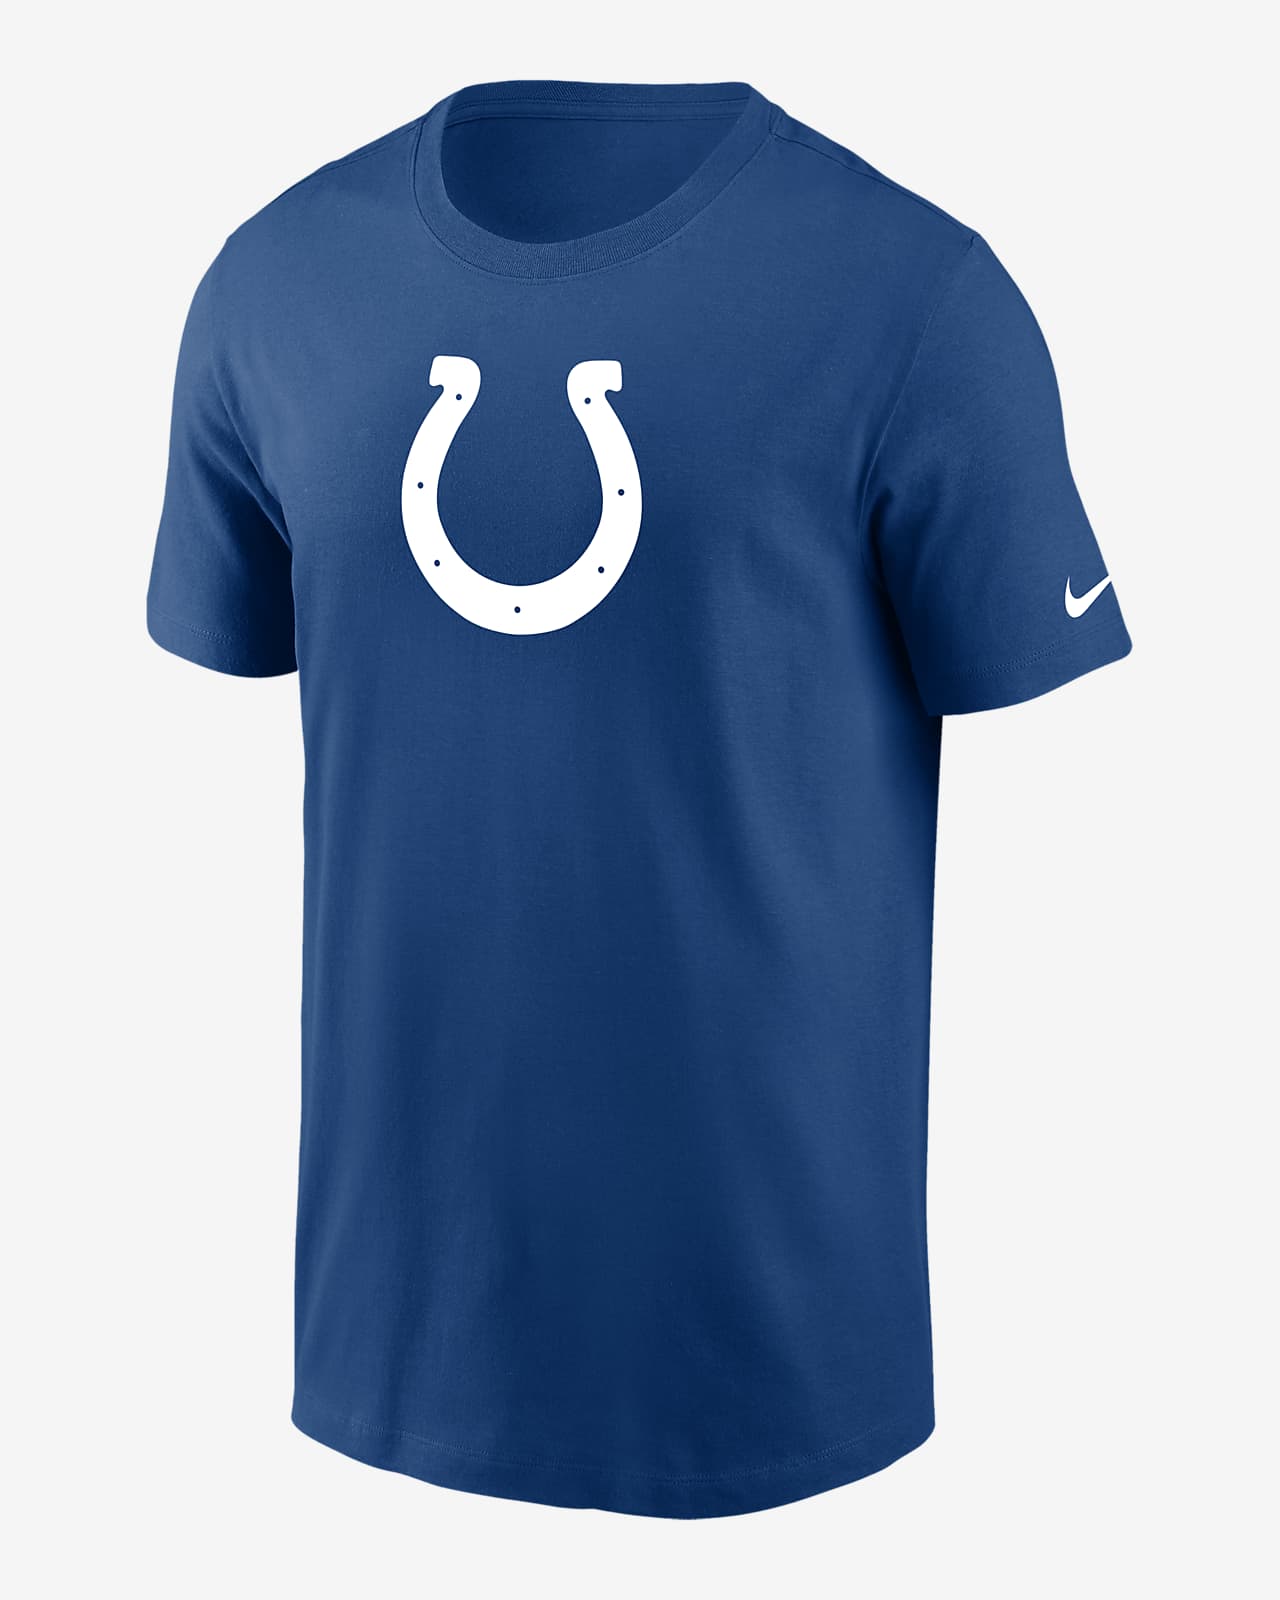 Nike Logo Essential (NFL Indianapolis Colts) Men's T-Shirt